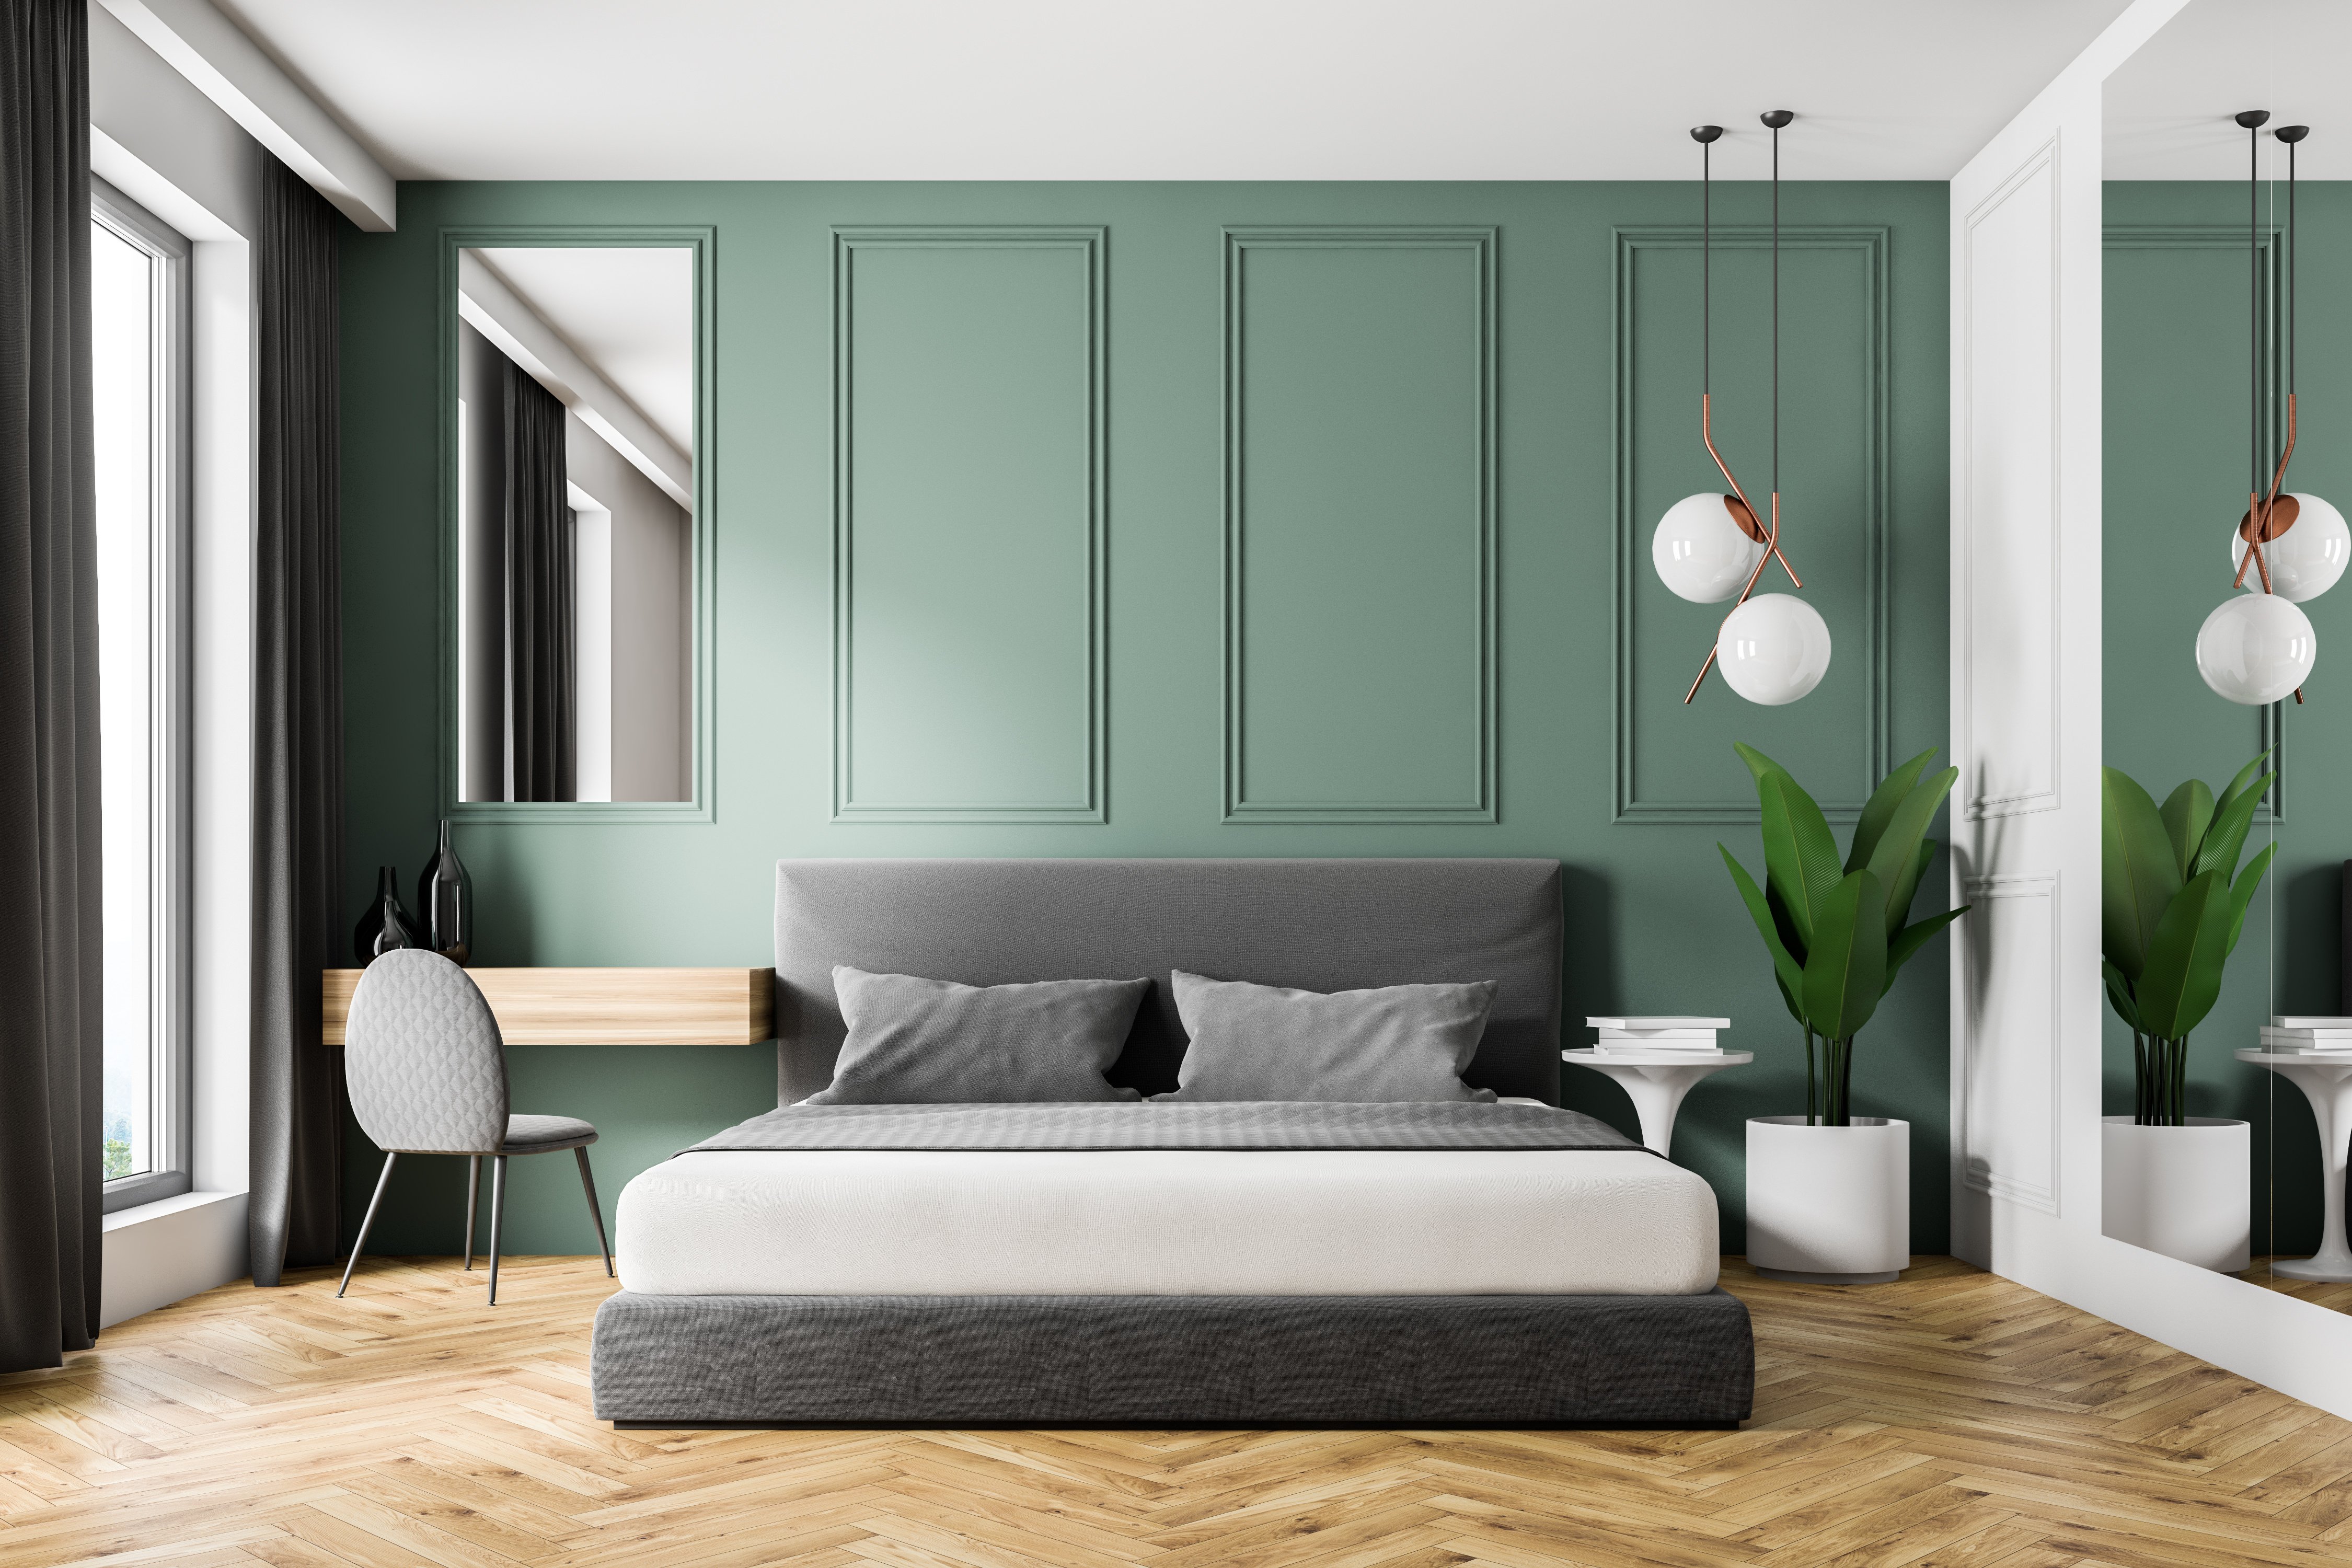 Green decorative MDF bedroom wall panels